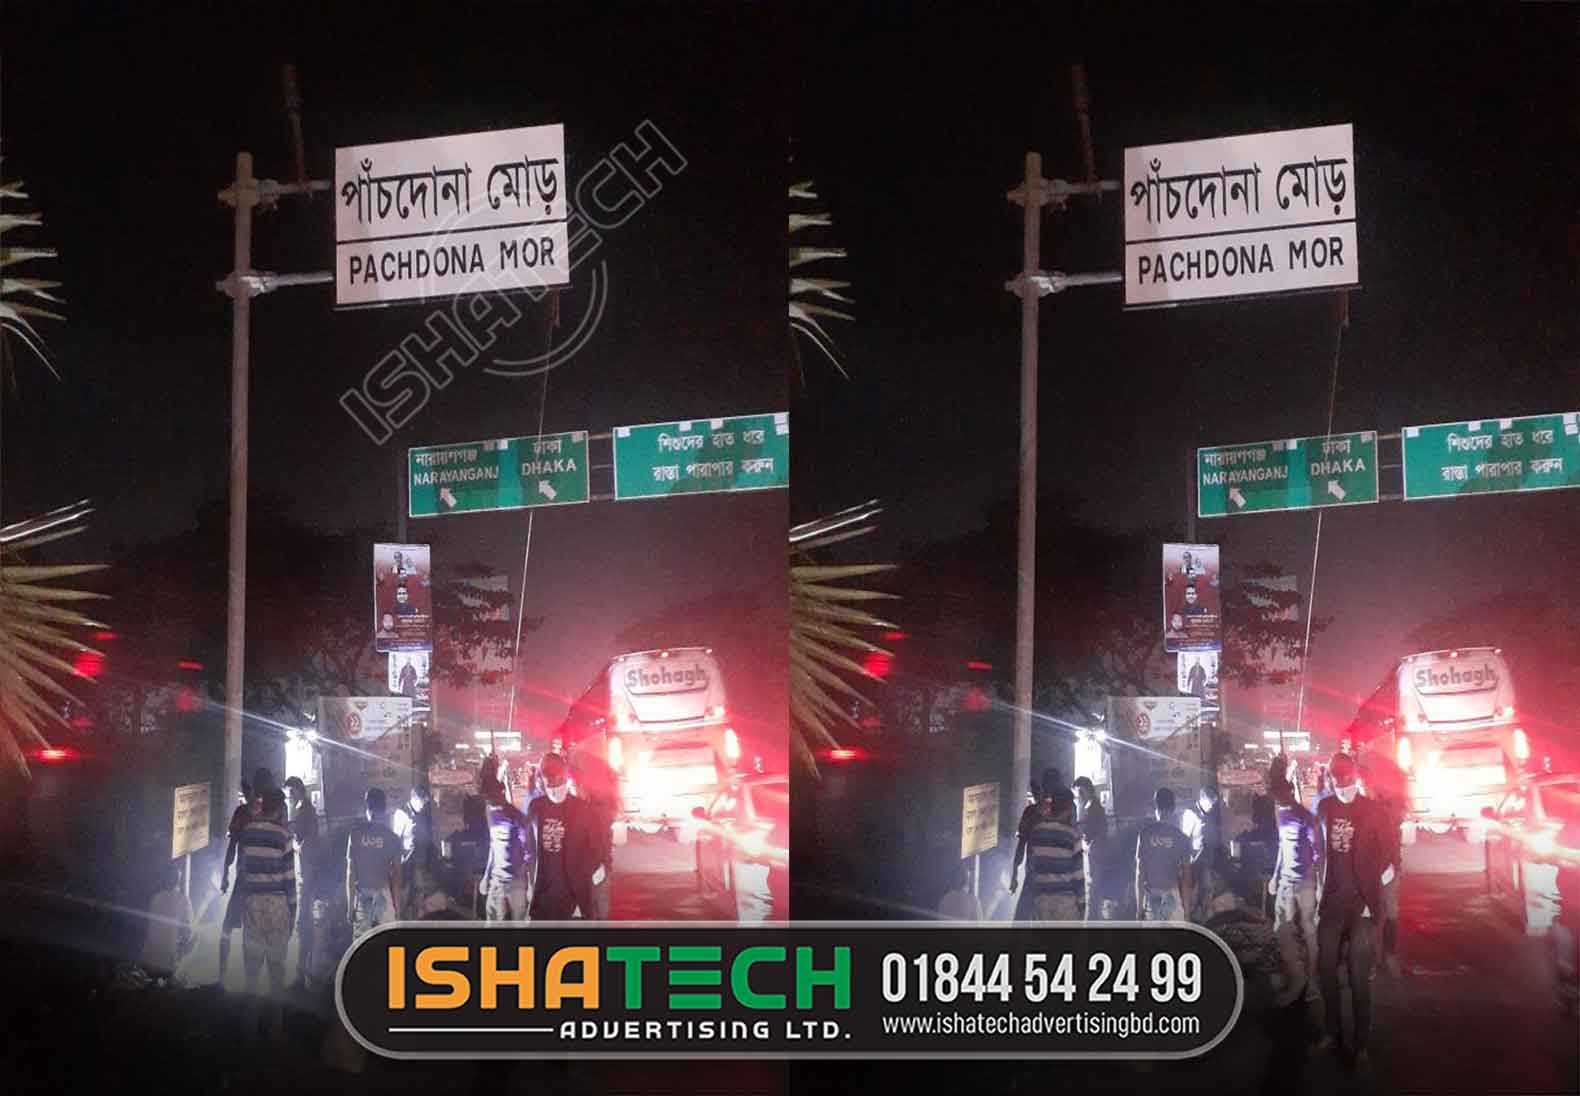 PACHDONA MORE ROAD AND HIGHWAY LED BILLBOARD ADS IN DHAKA, BANGLADESH